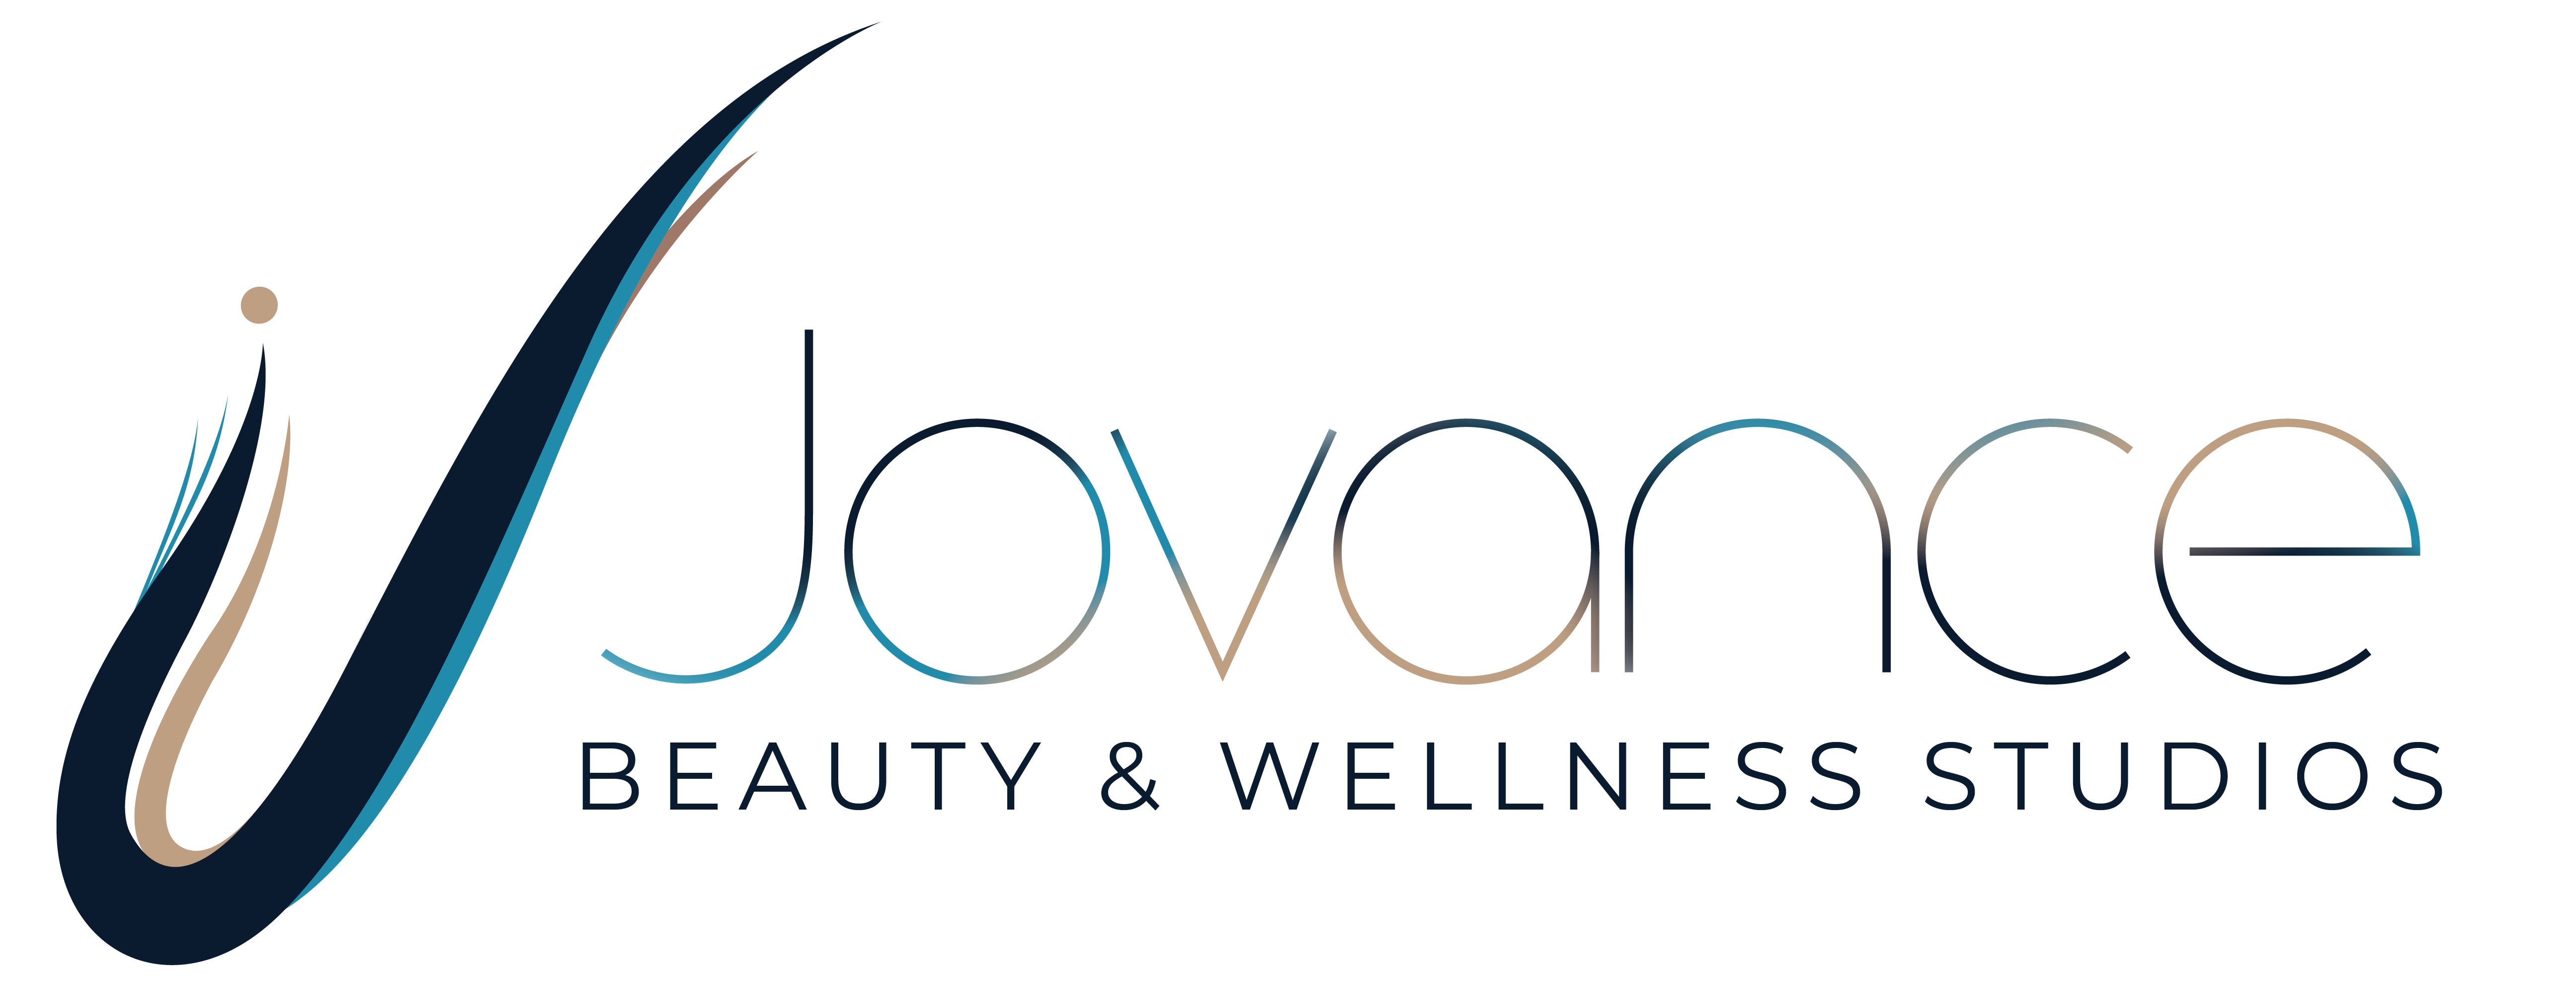 Jovance Beauty & Wellness Studios